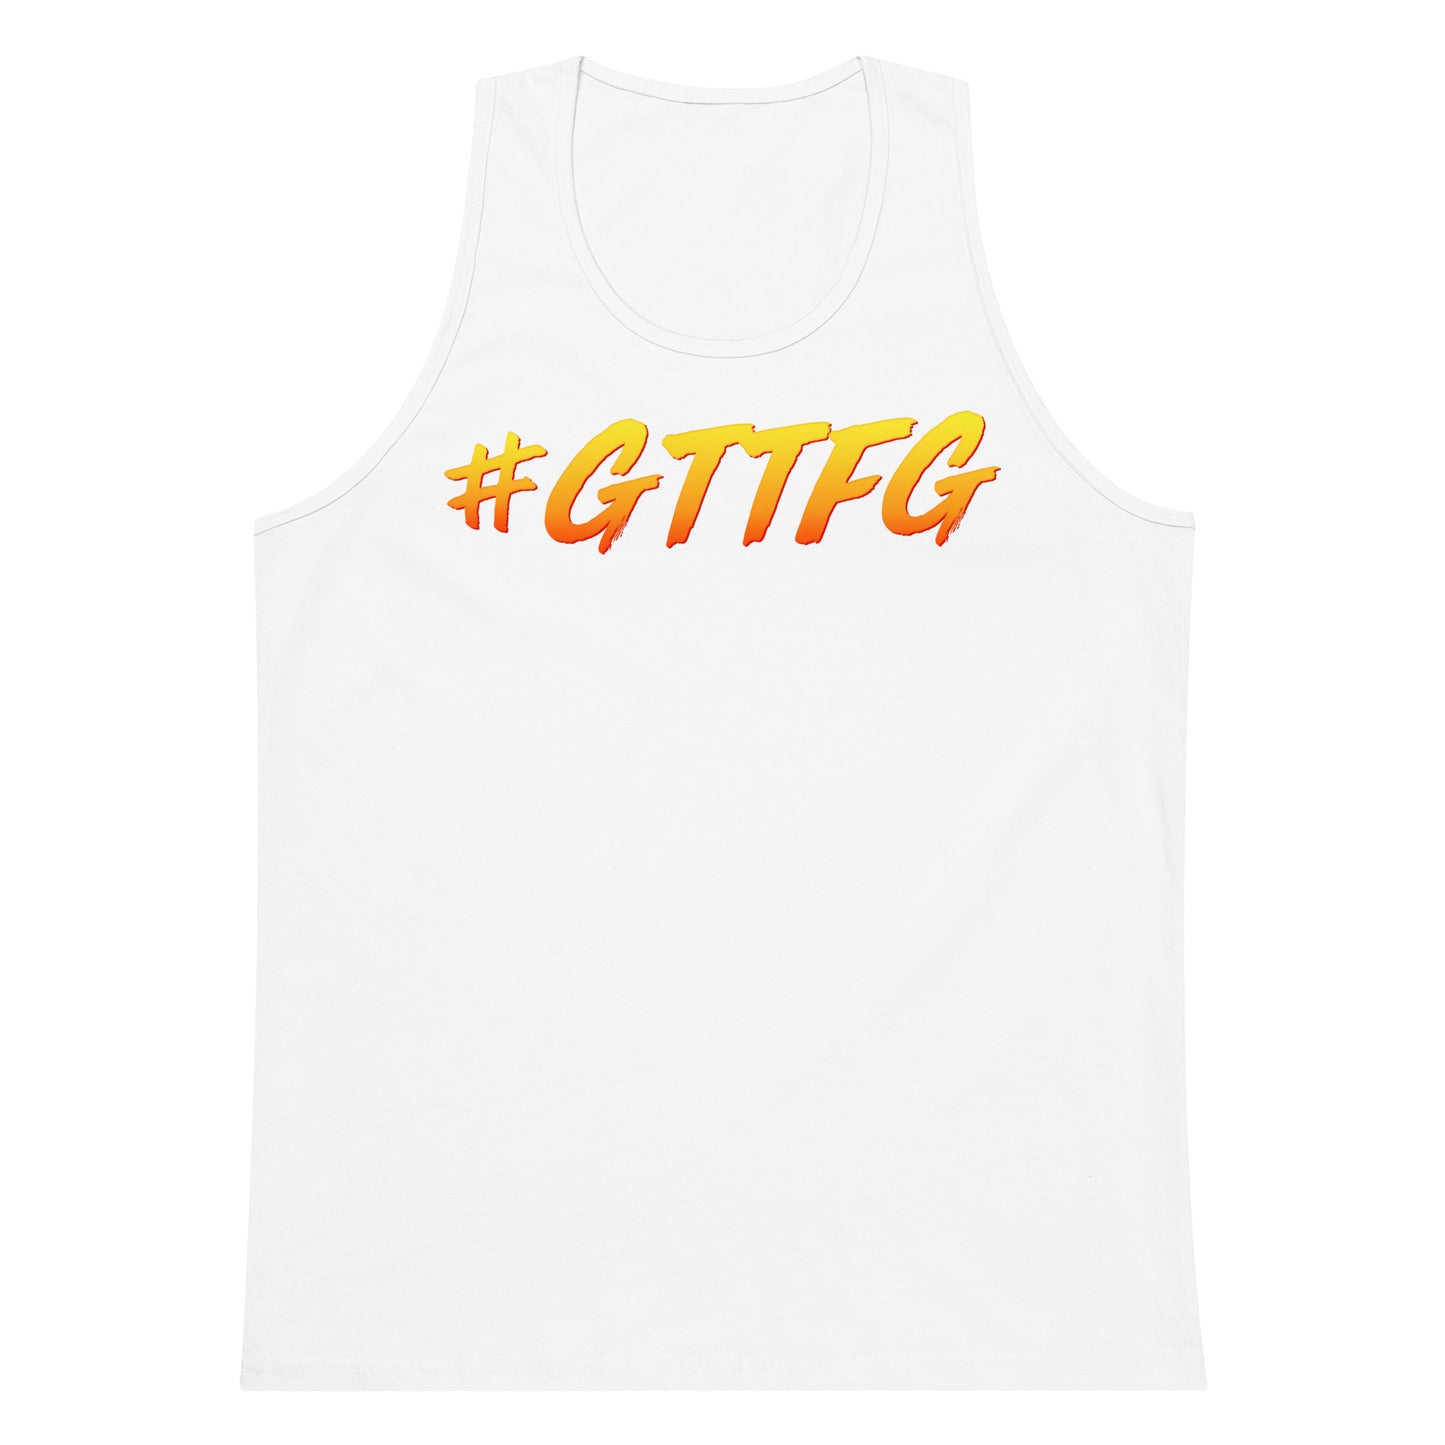 #GTTFG Men’s Premium Tank Top